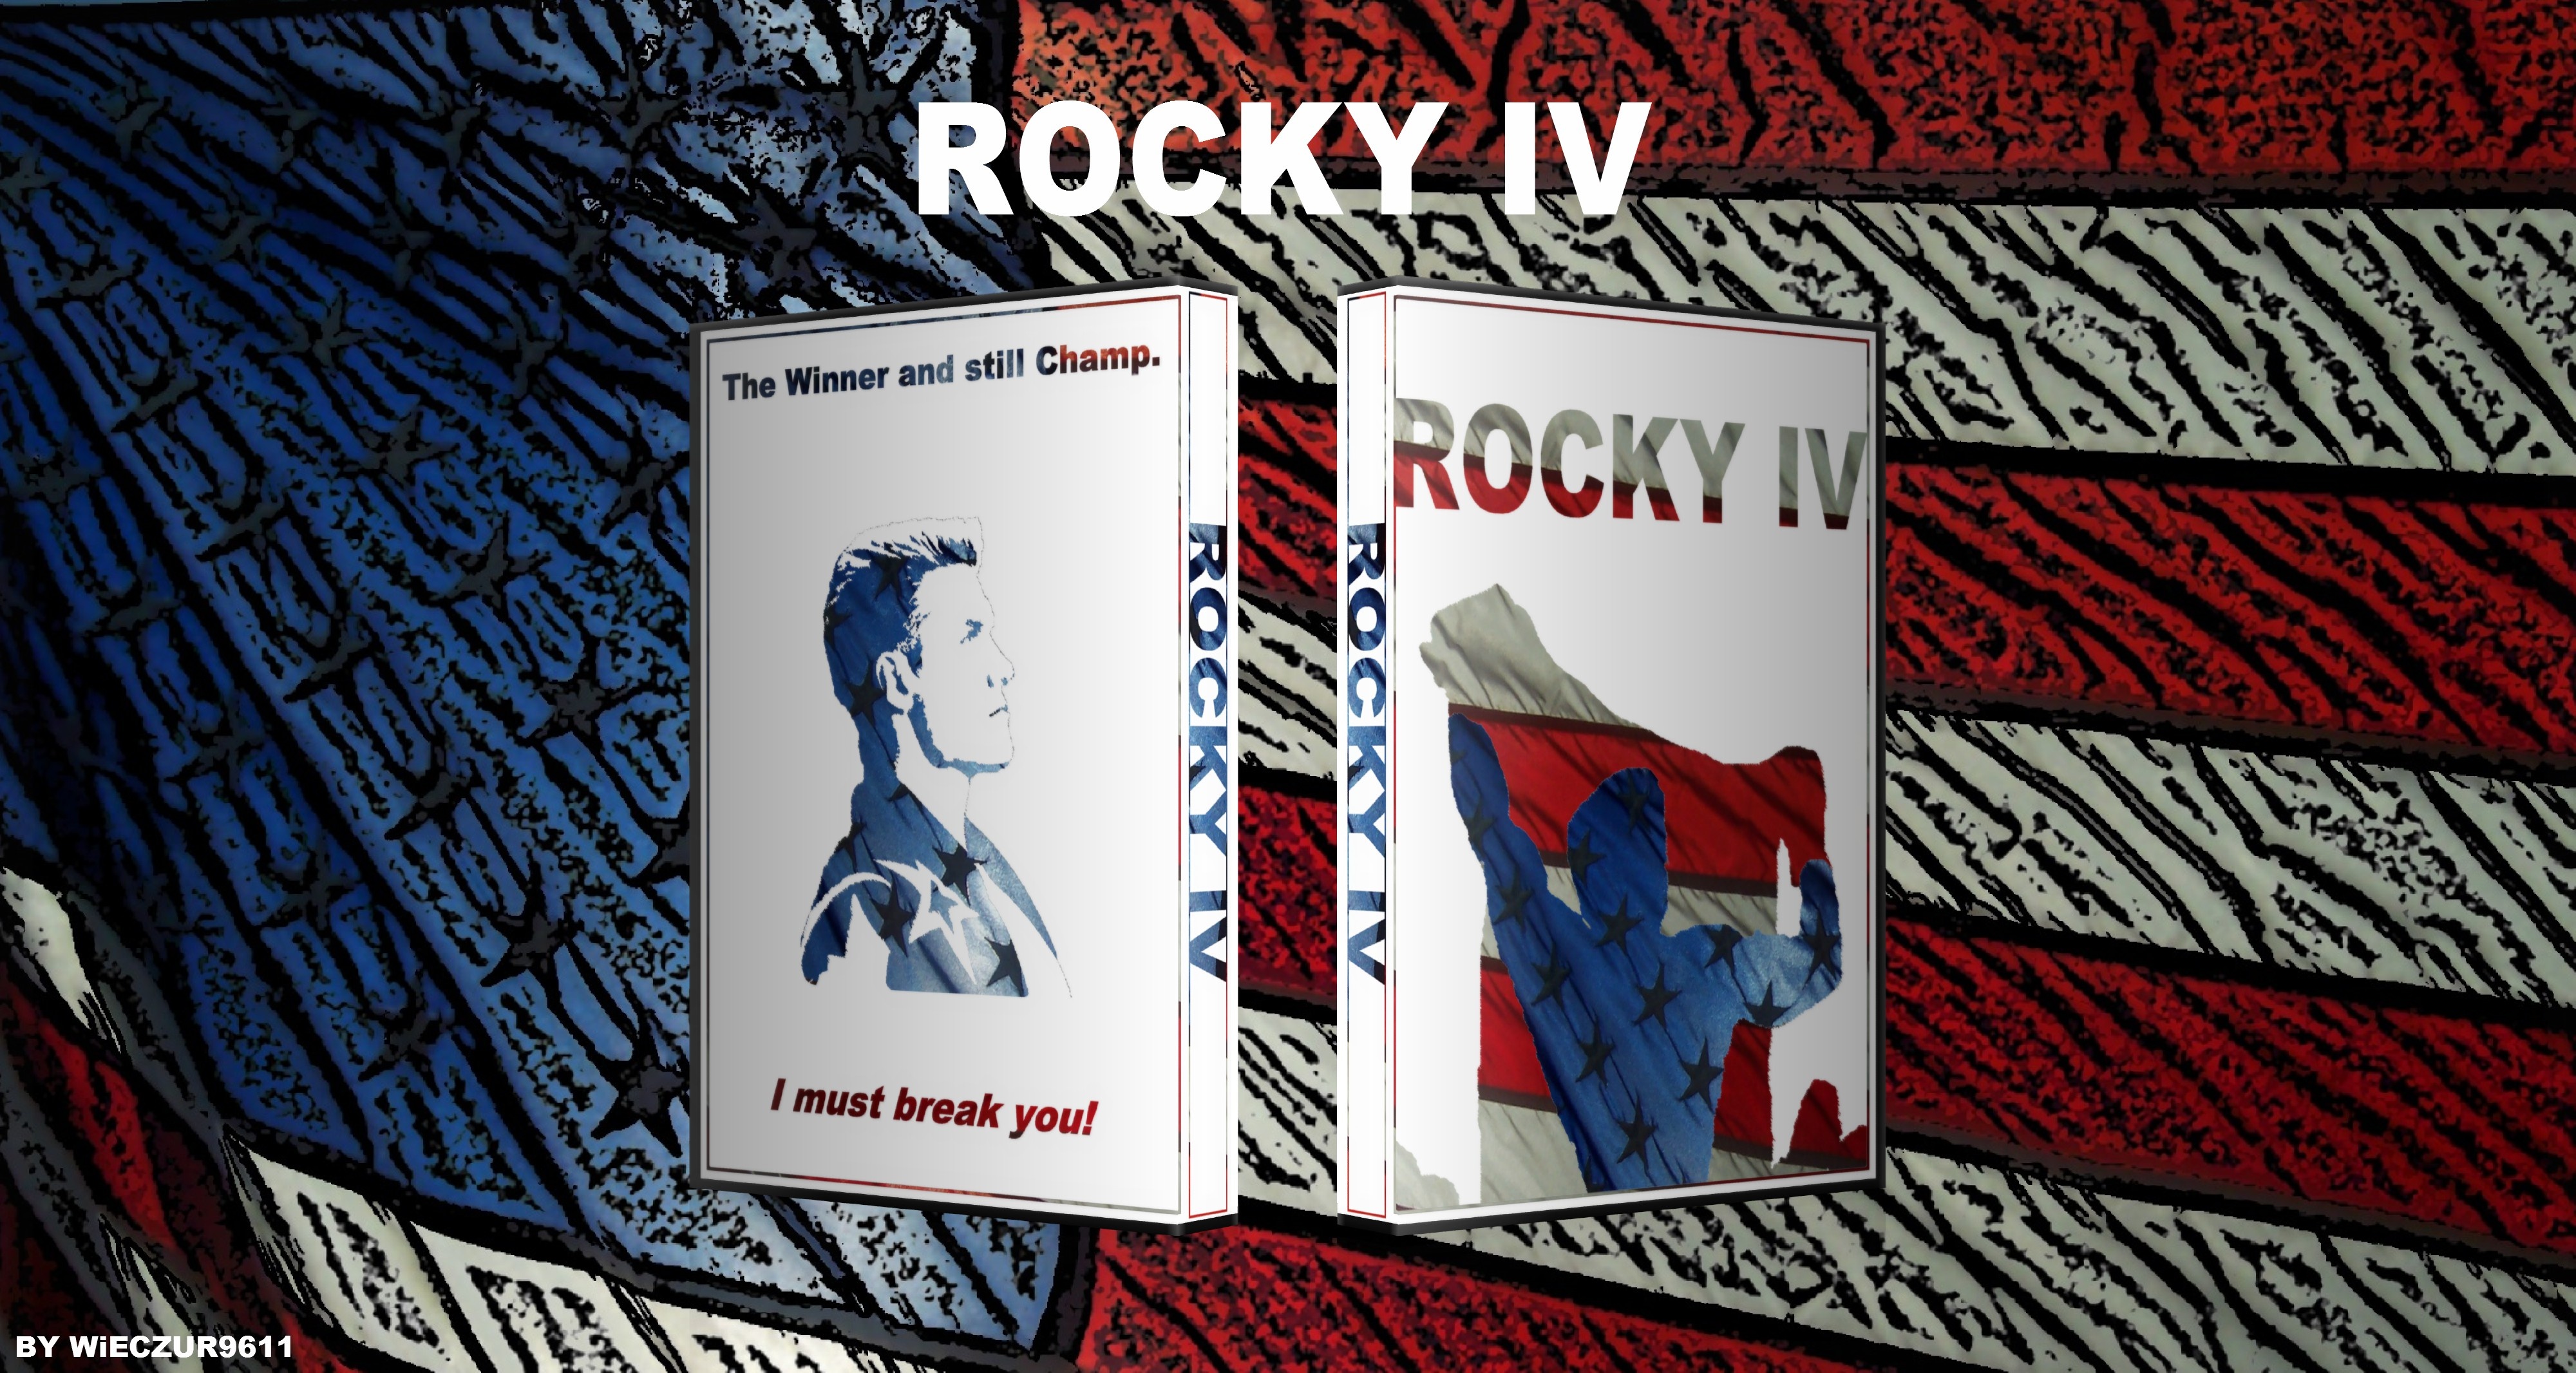 Rocky IV box cover